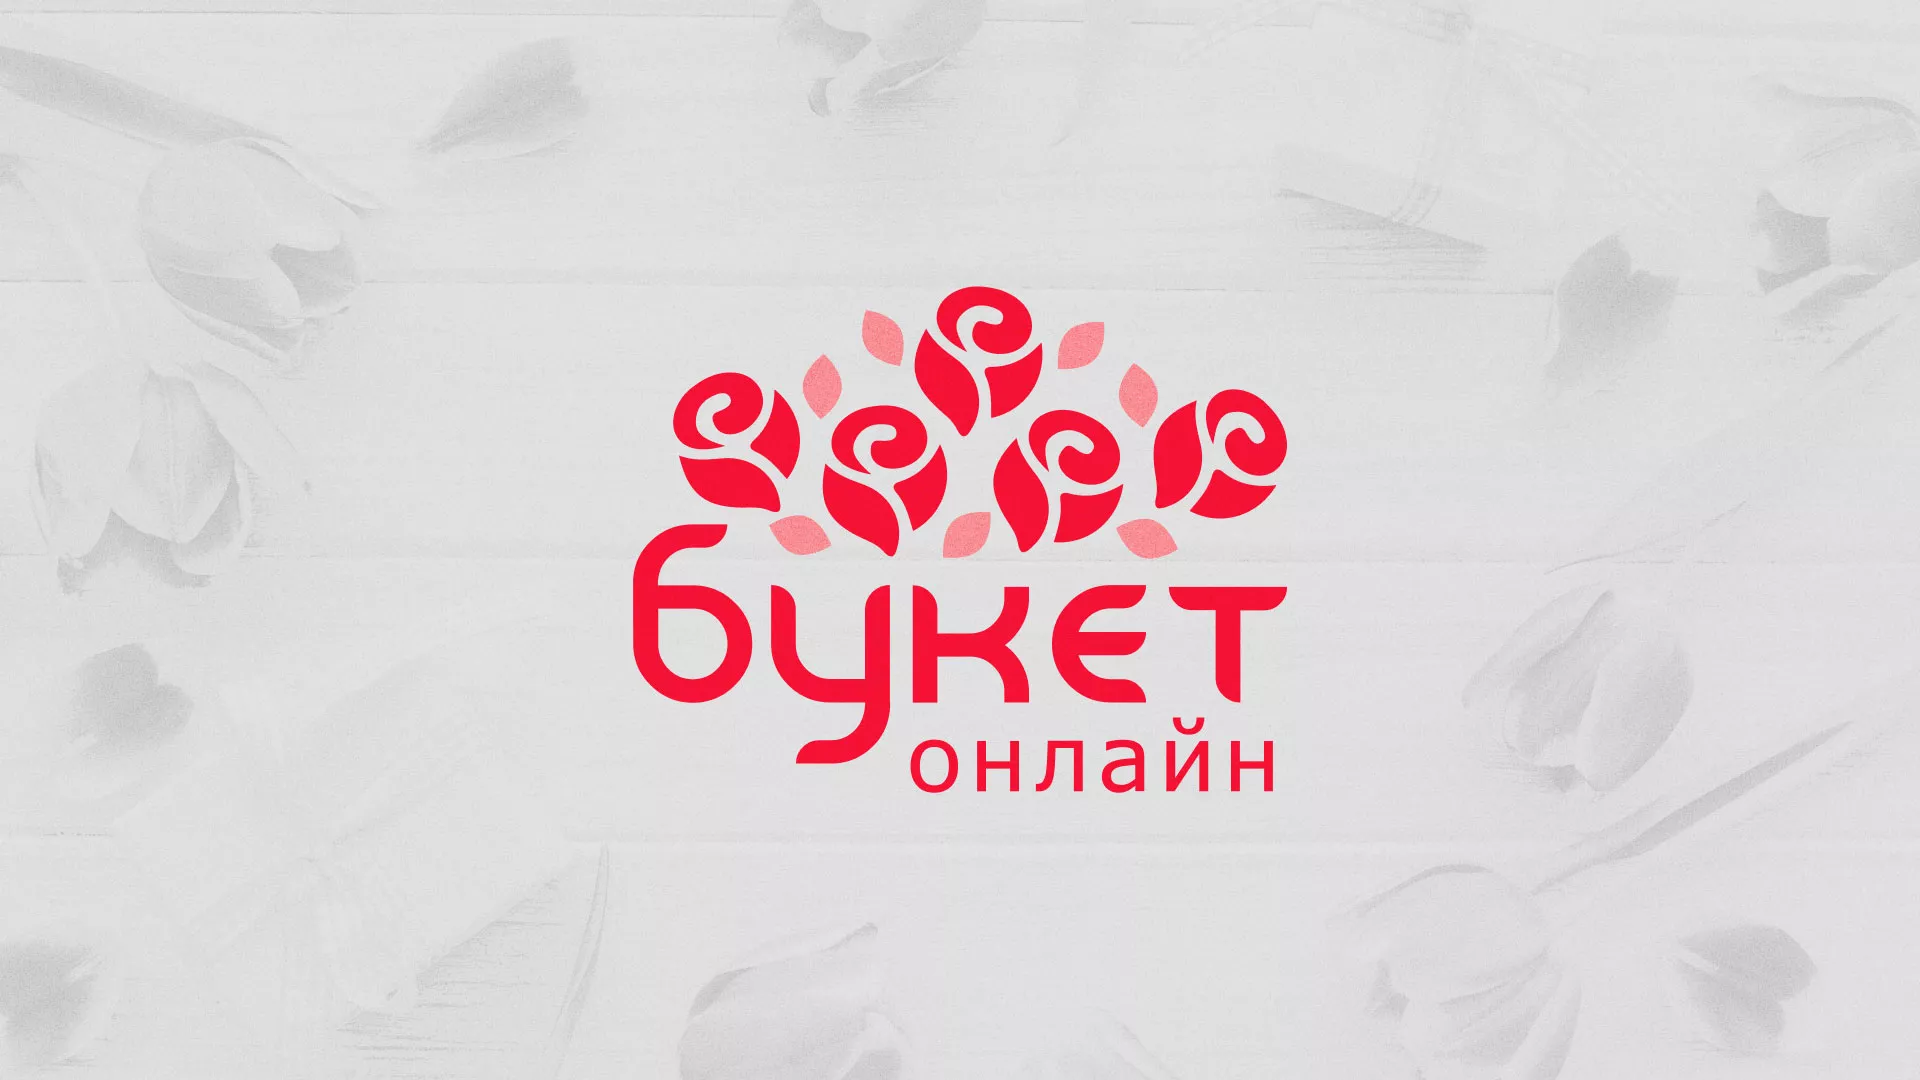 Создание интернет-магазина «Букет-онлайн» по цветам в Грязях